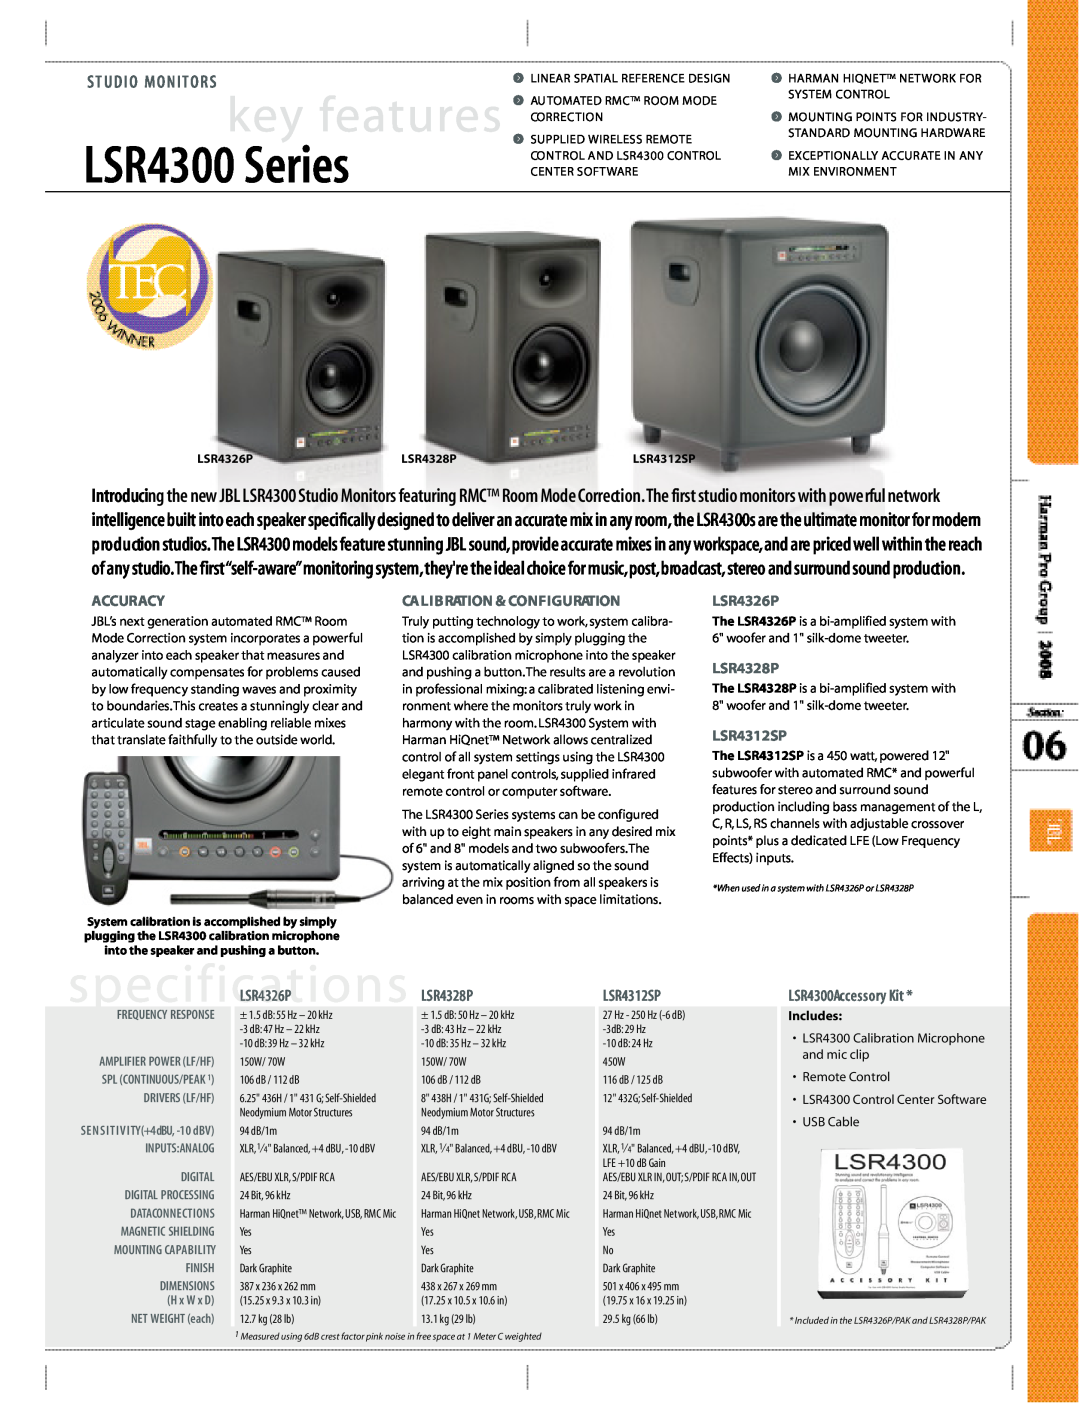 JBM electronic Studio Monitors LSR4300 Series, key features f, L S R 4 3 2 8 P, L S R 4 3 1 2 S P, LSR4300Accessory Kit 